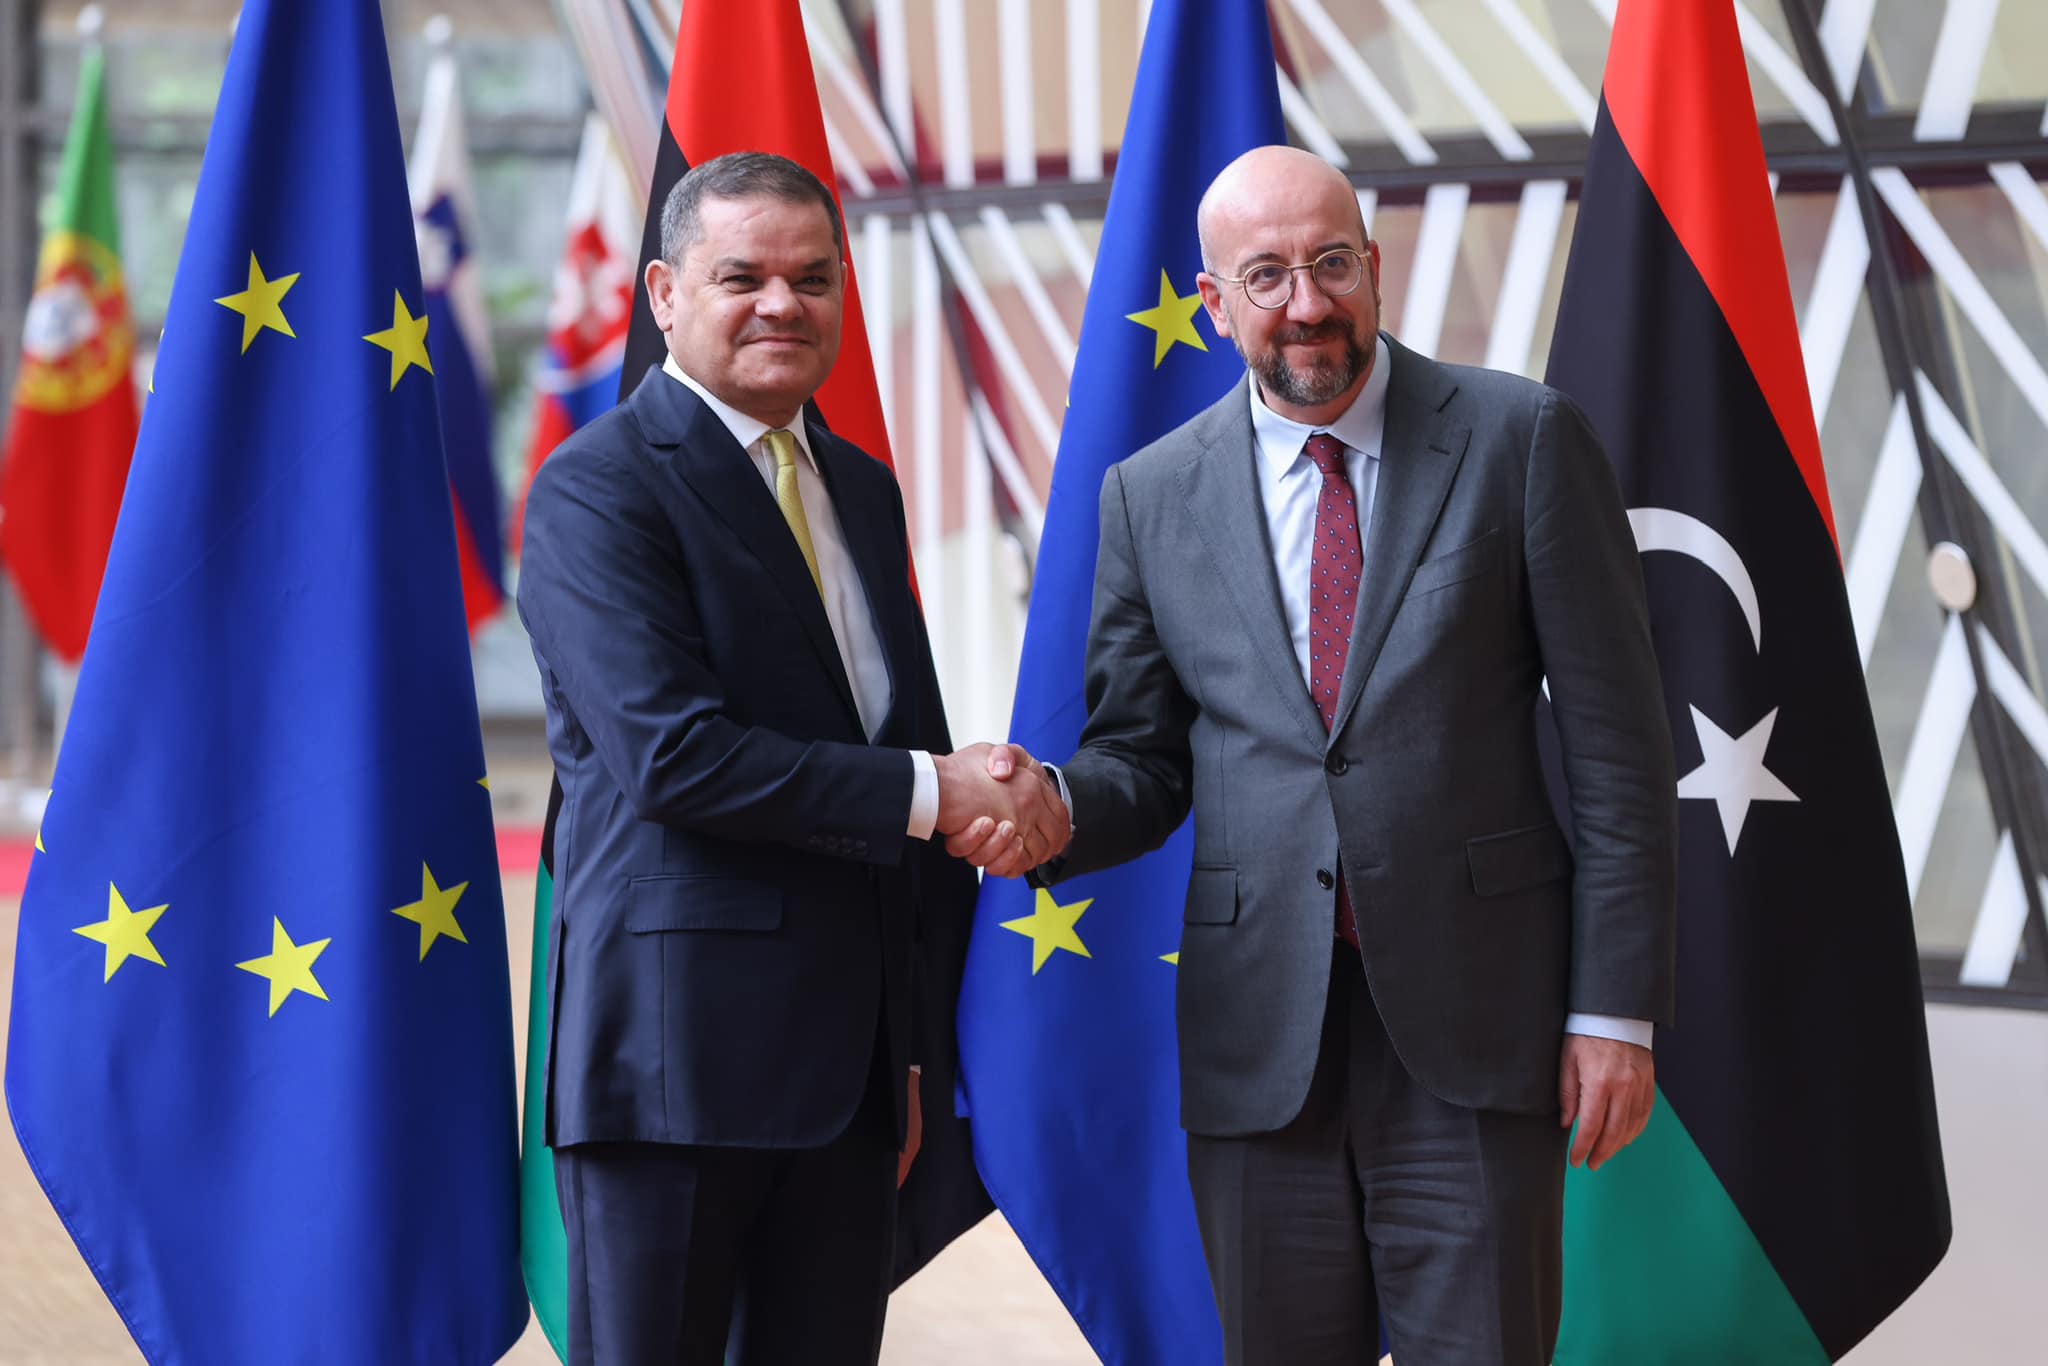 Dabaiba and Michel discuss lifting the air ban on Libyan aviation